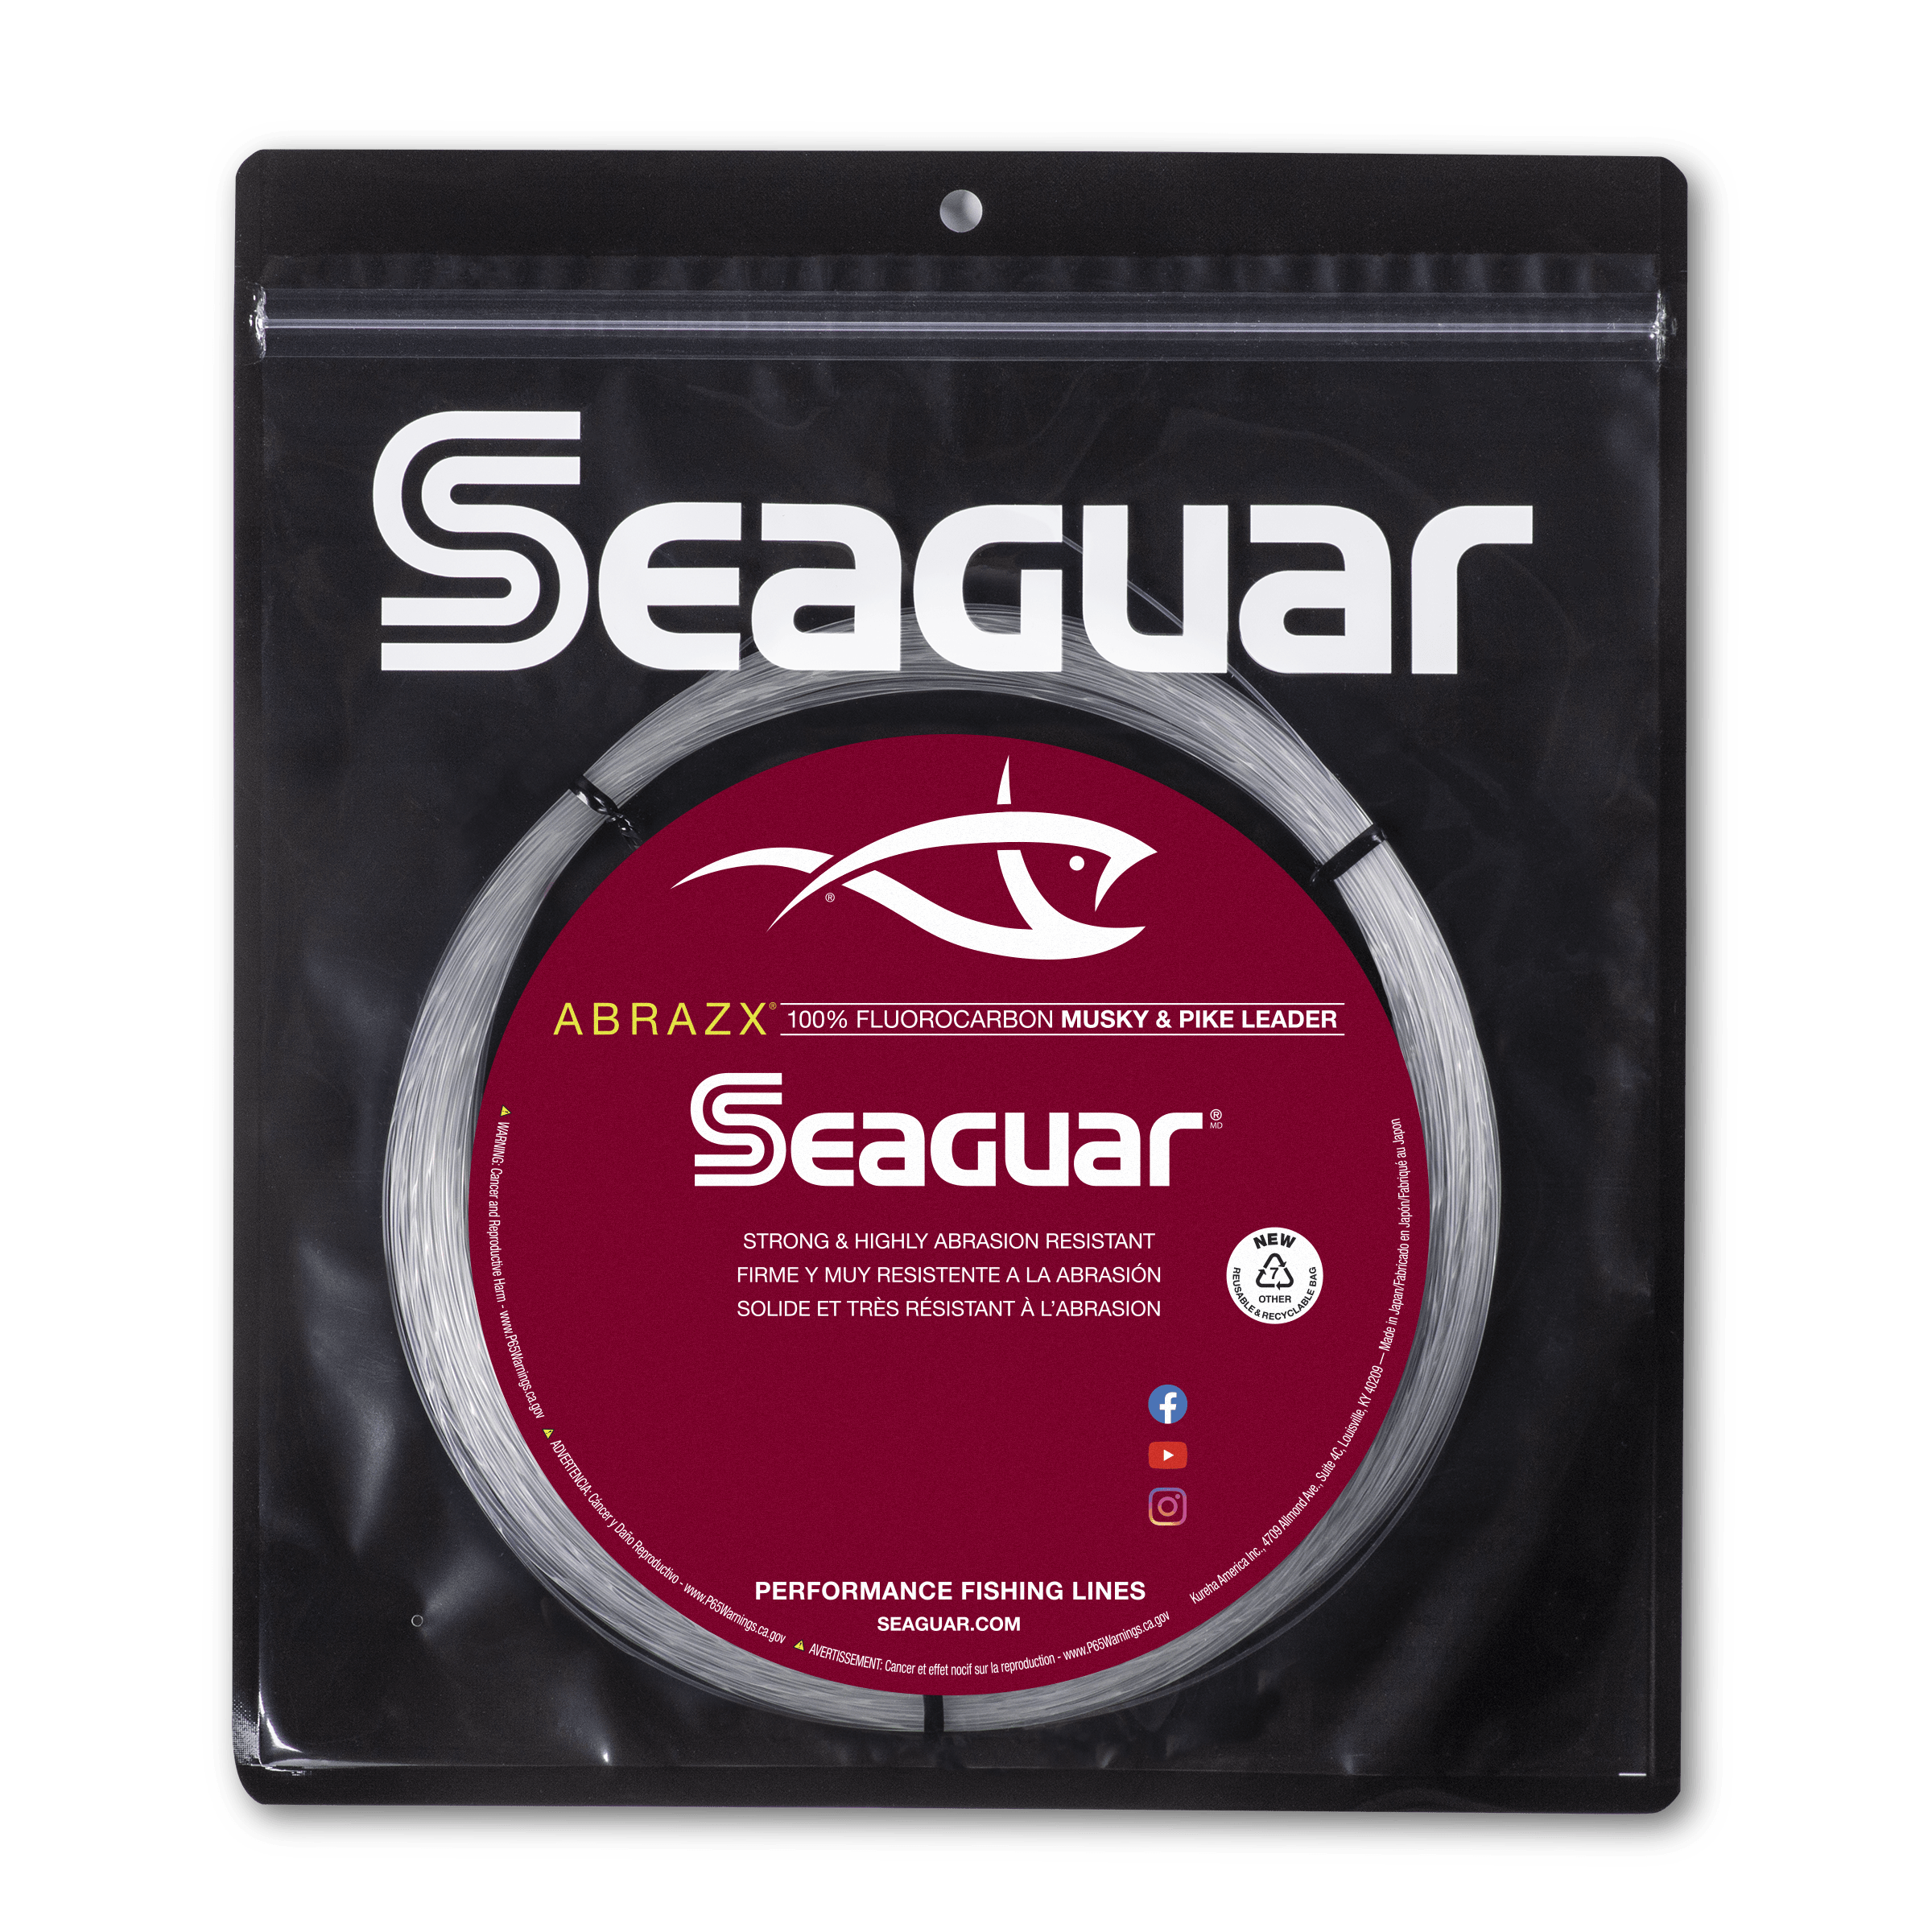 Seaguar Threadlock Hollow Core Braid 80lb Strength Test 